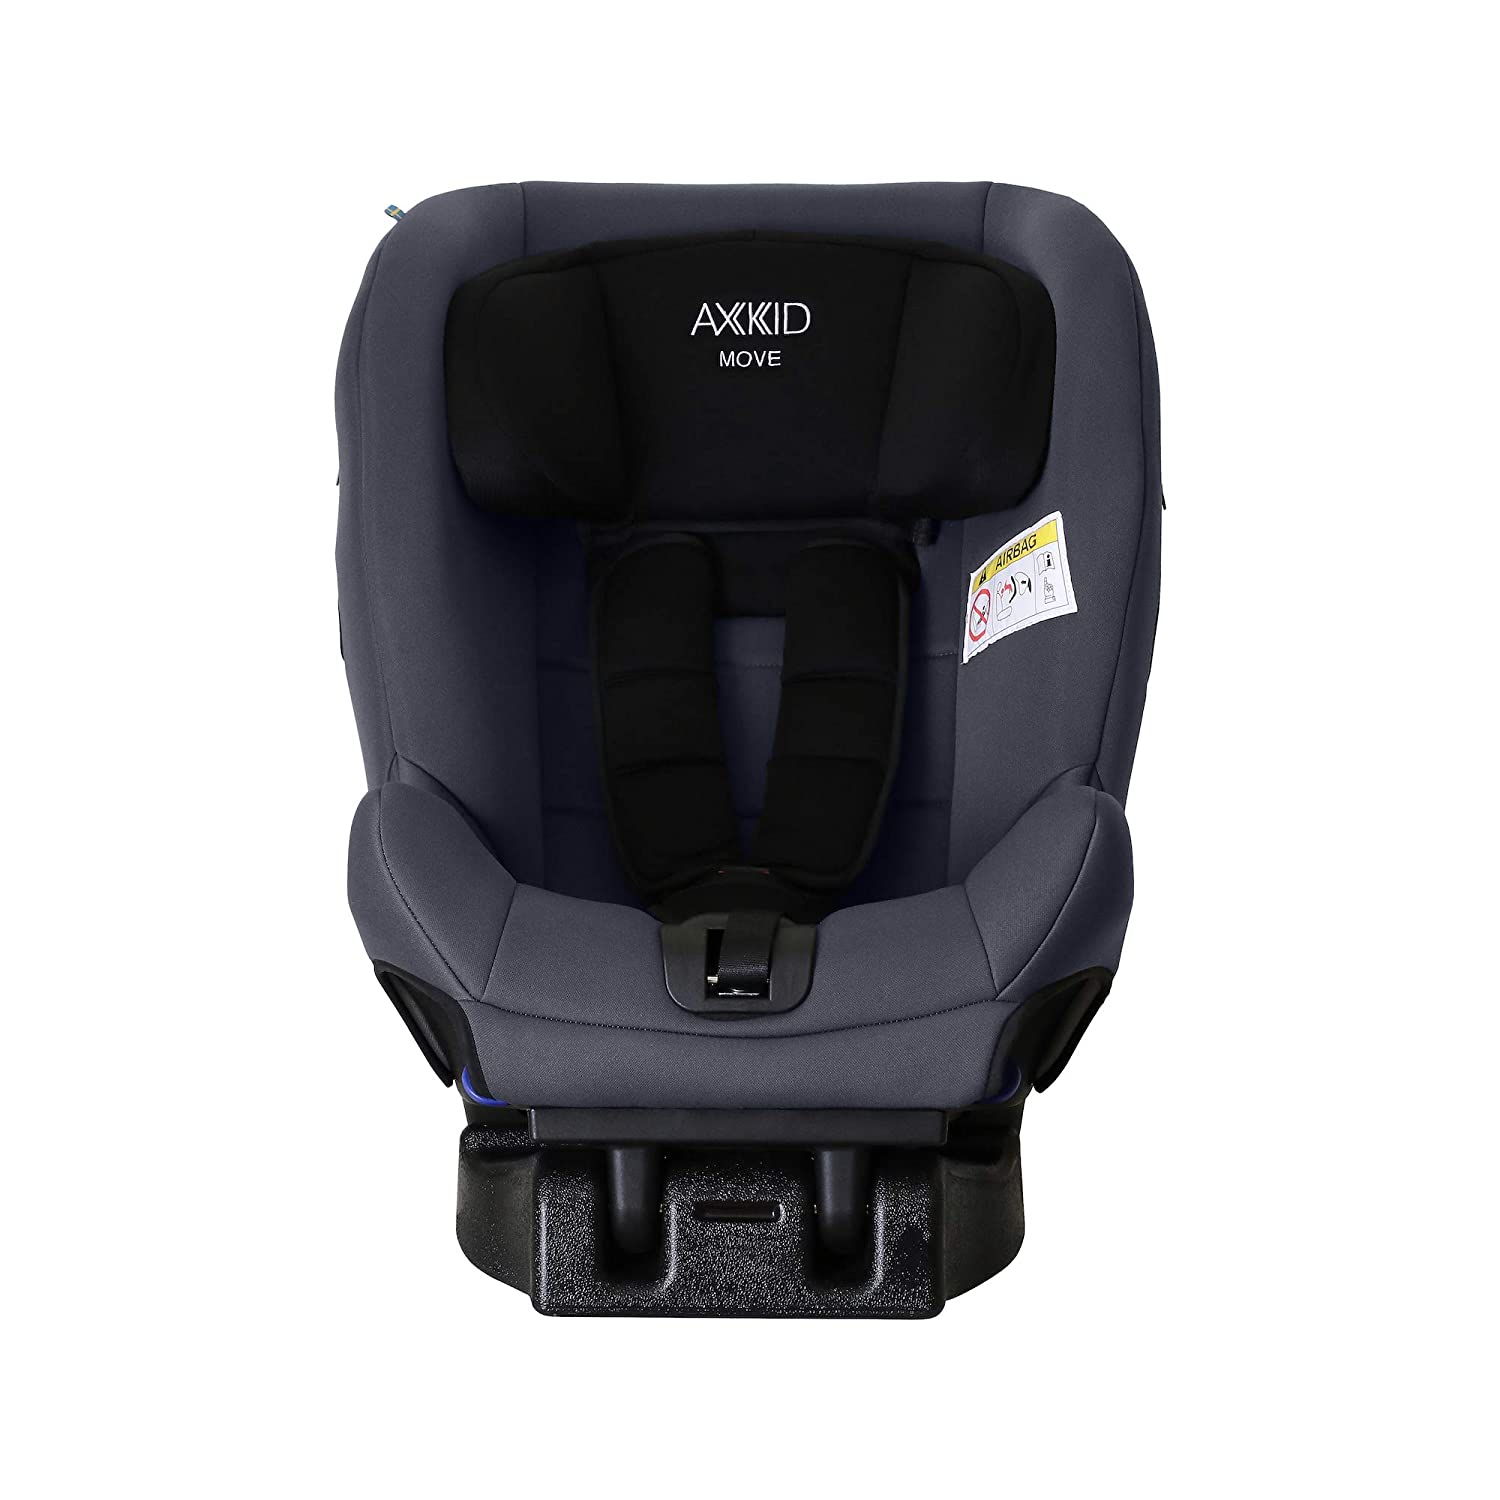 Axkid Move Child Seat - Black